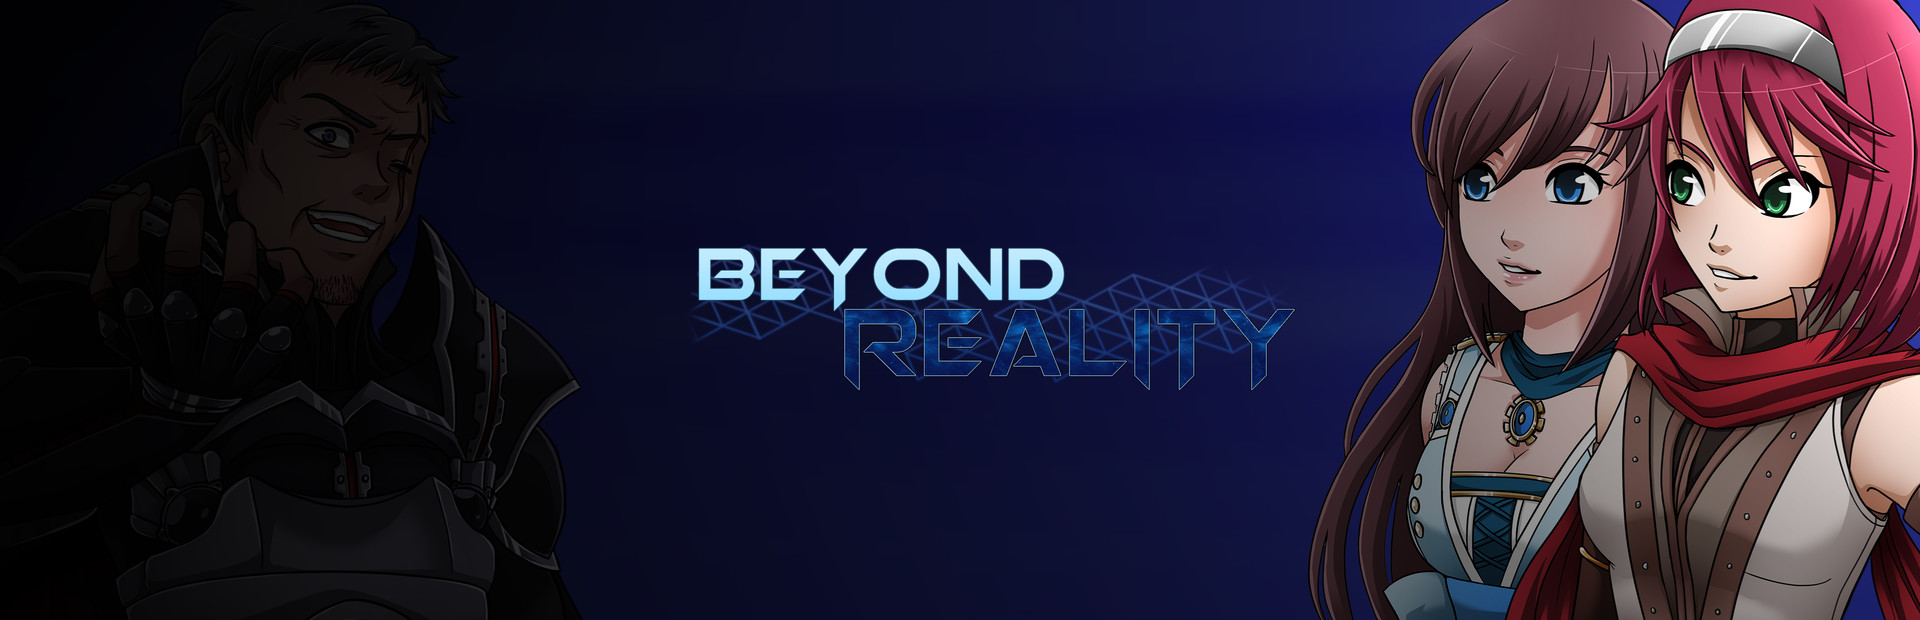 Beyond Reality cover image